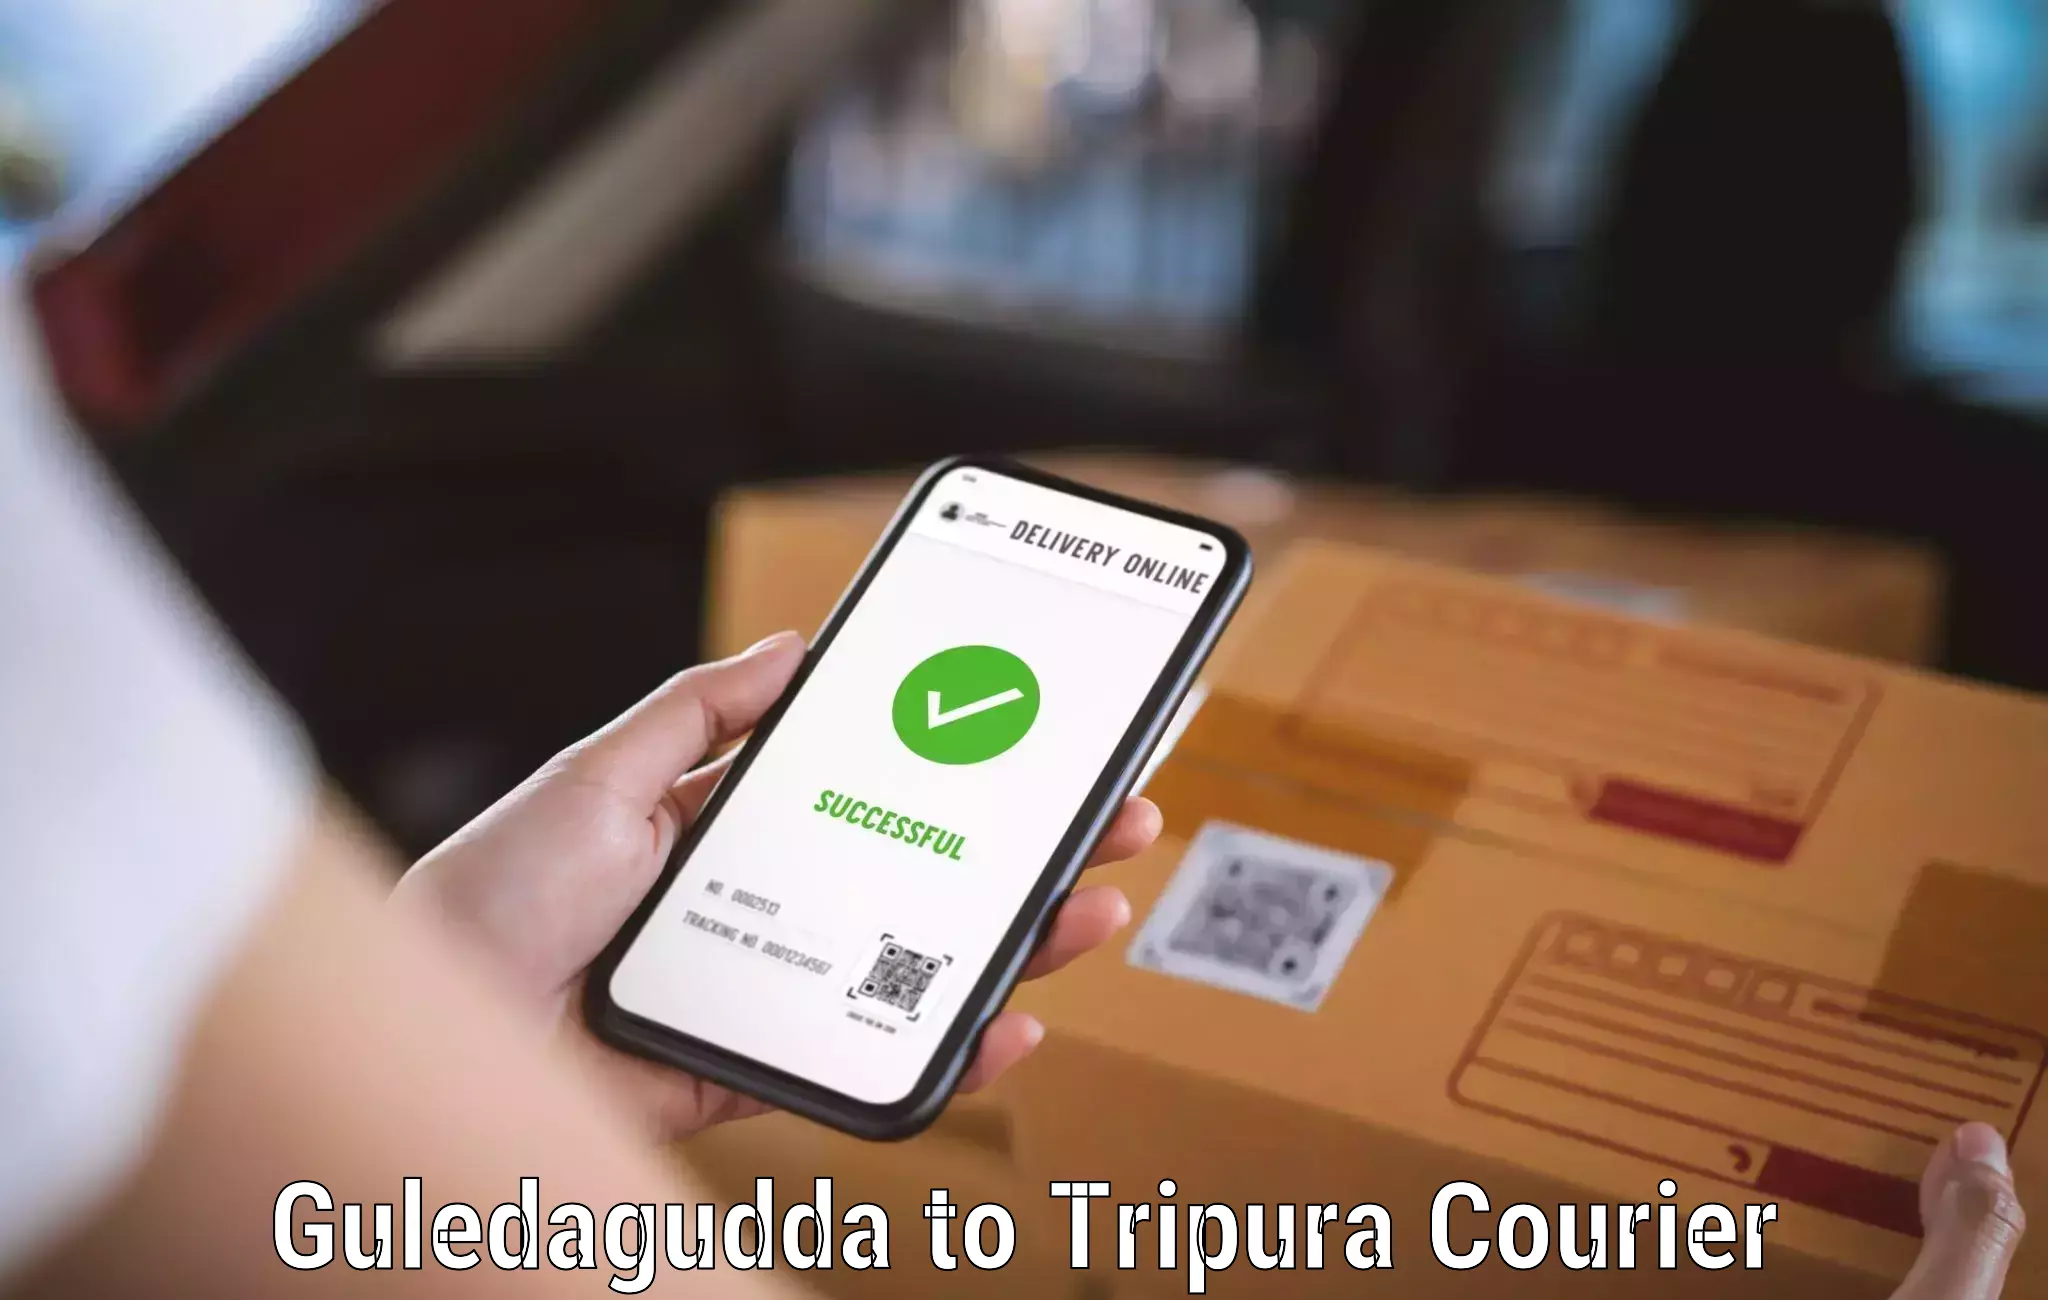 Flexible delivery scheduling Guledagudda to Udaipur Tripura